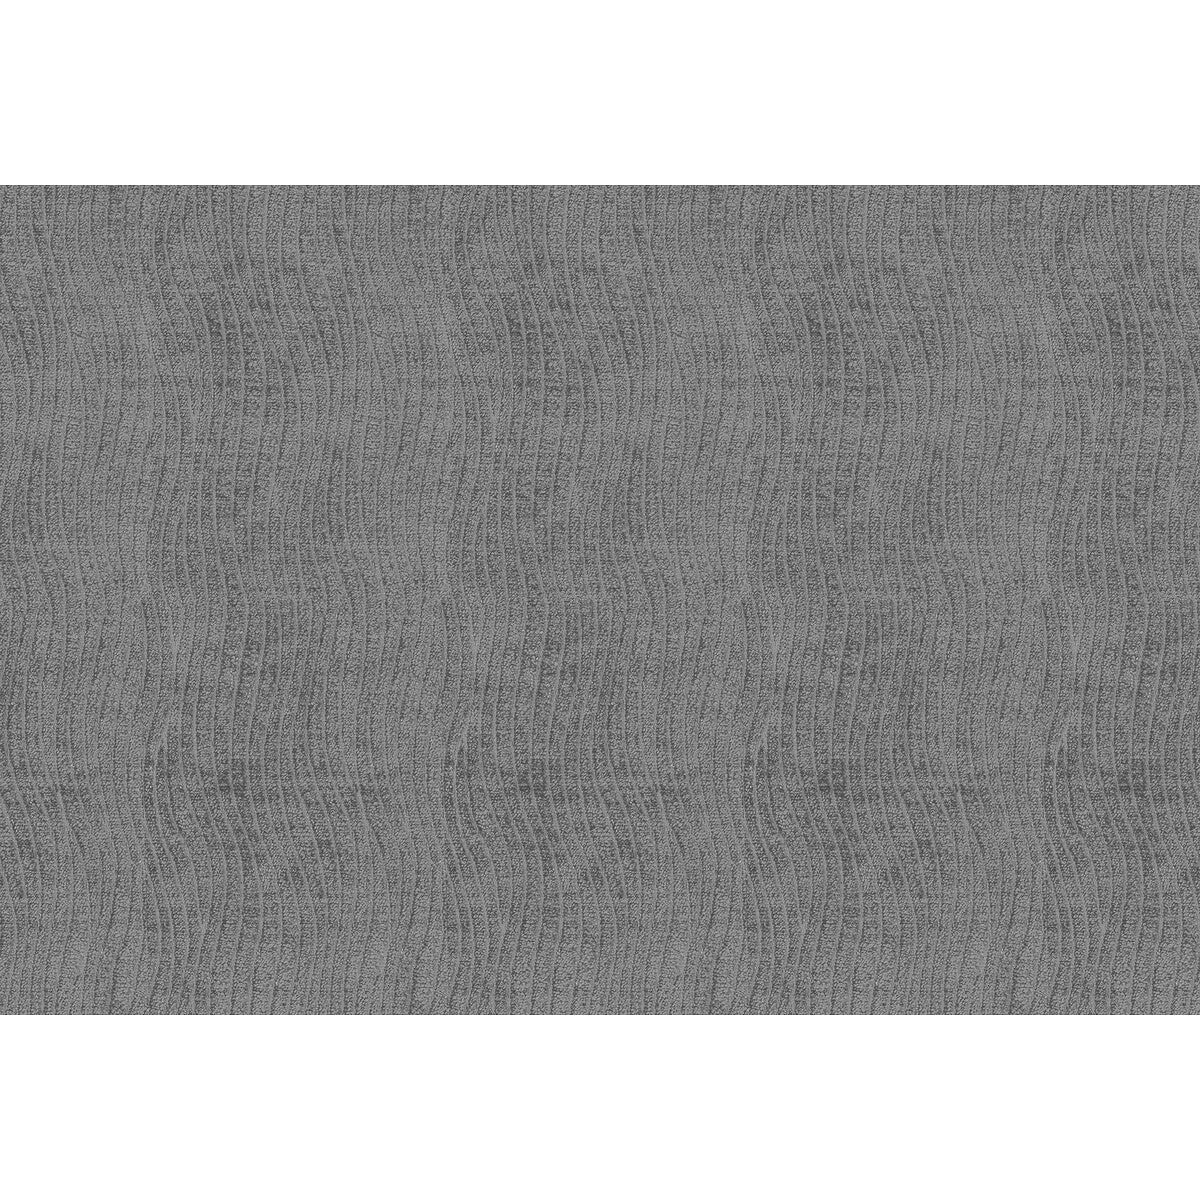 Kravet Smart fabric in 34296-11 color - pattern 34296.11.0 - by Kravet Smart